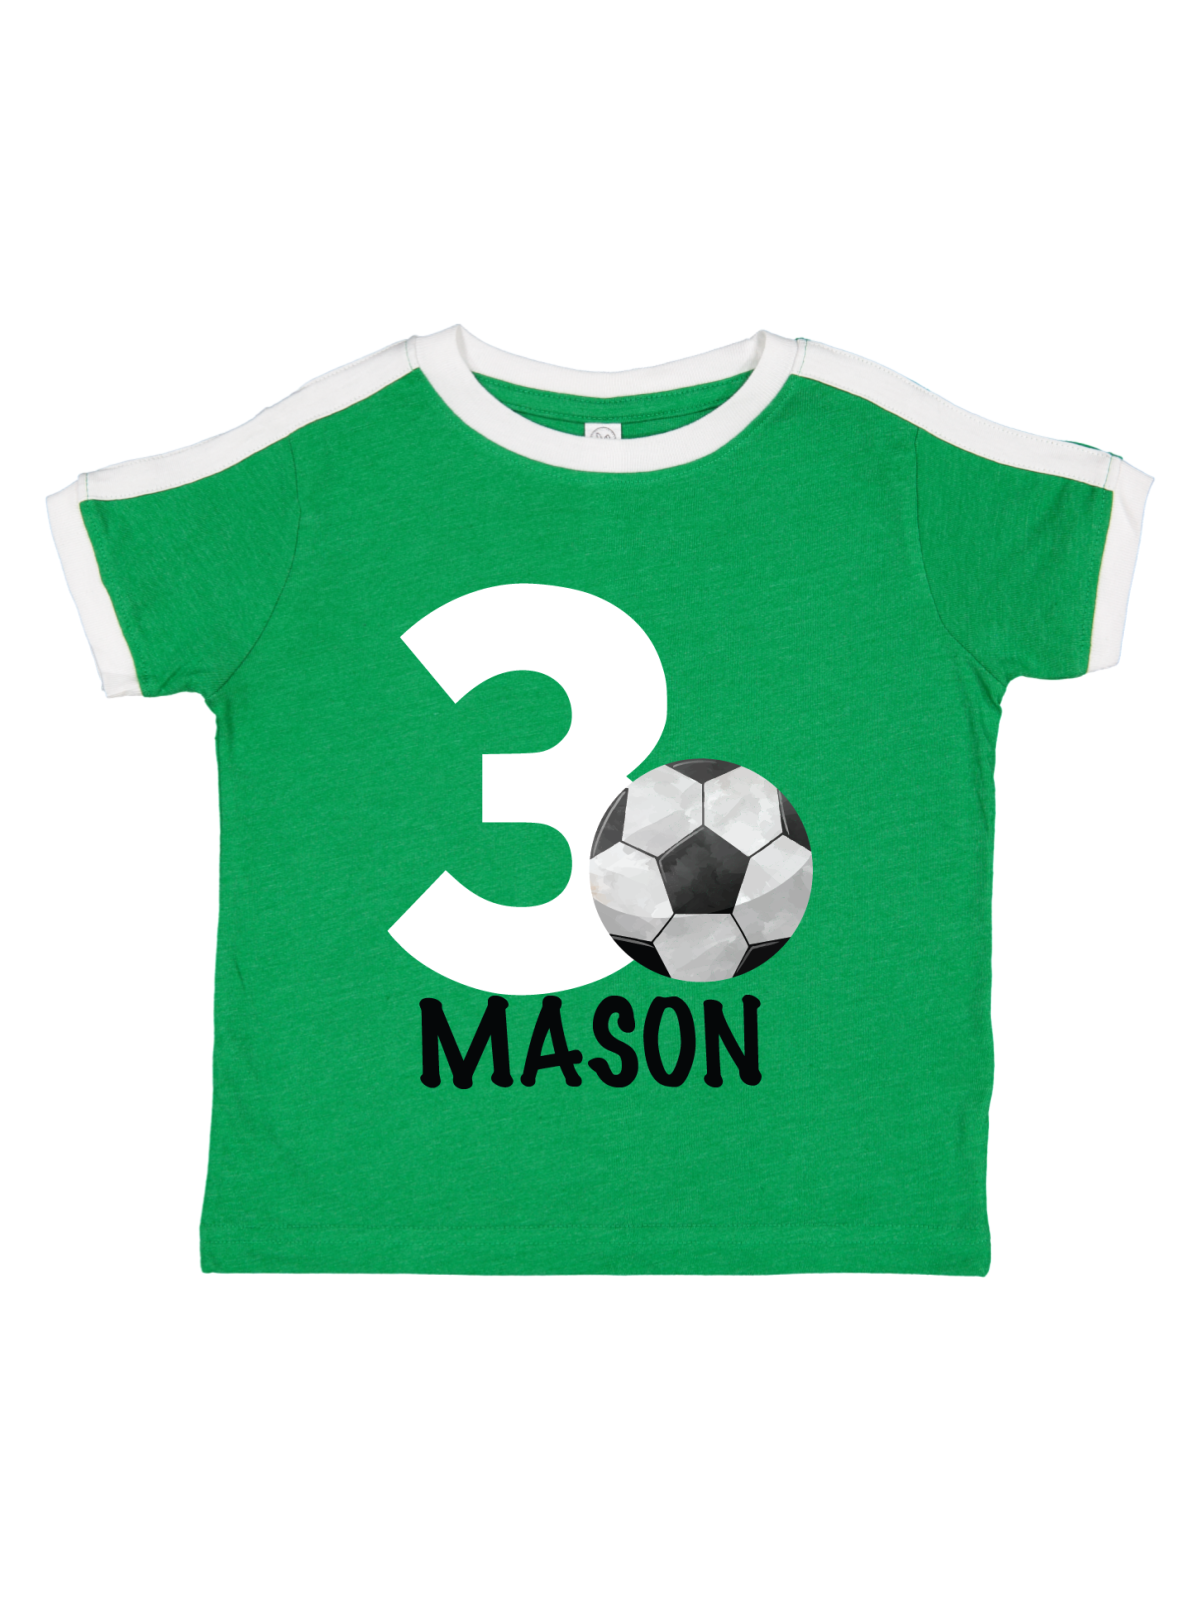 boys soccer birthday shirt in green